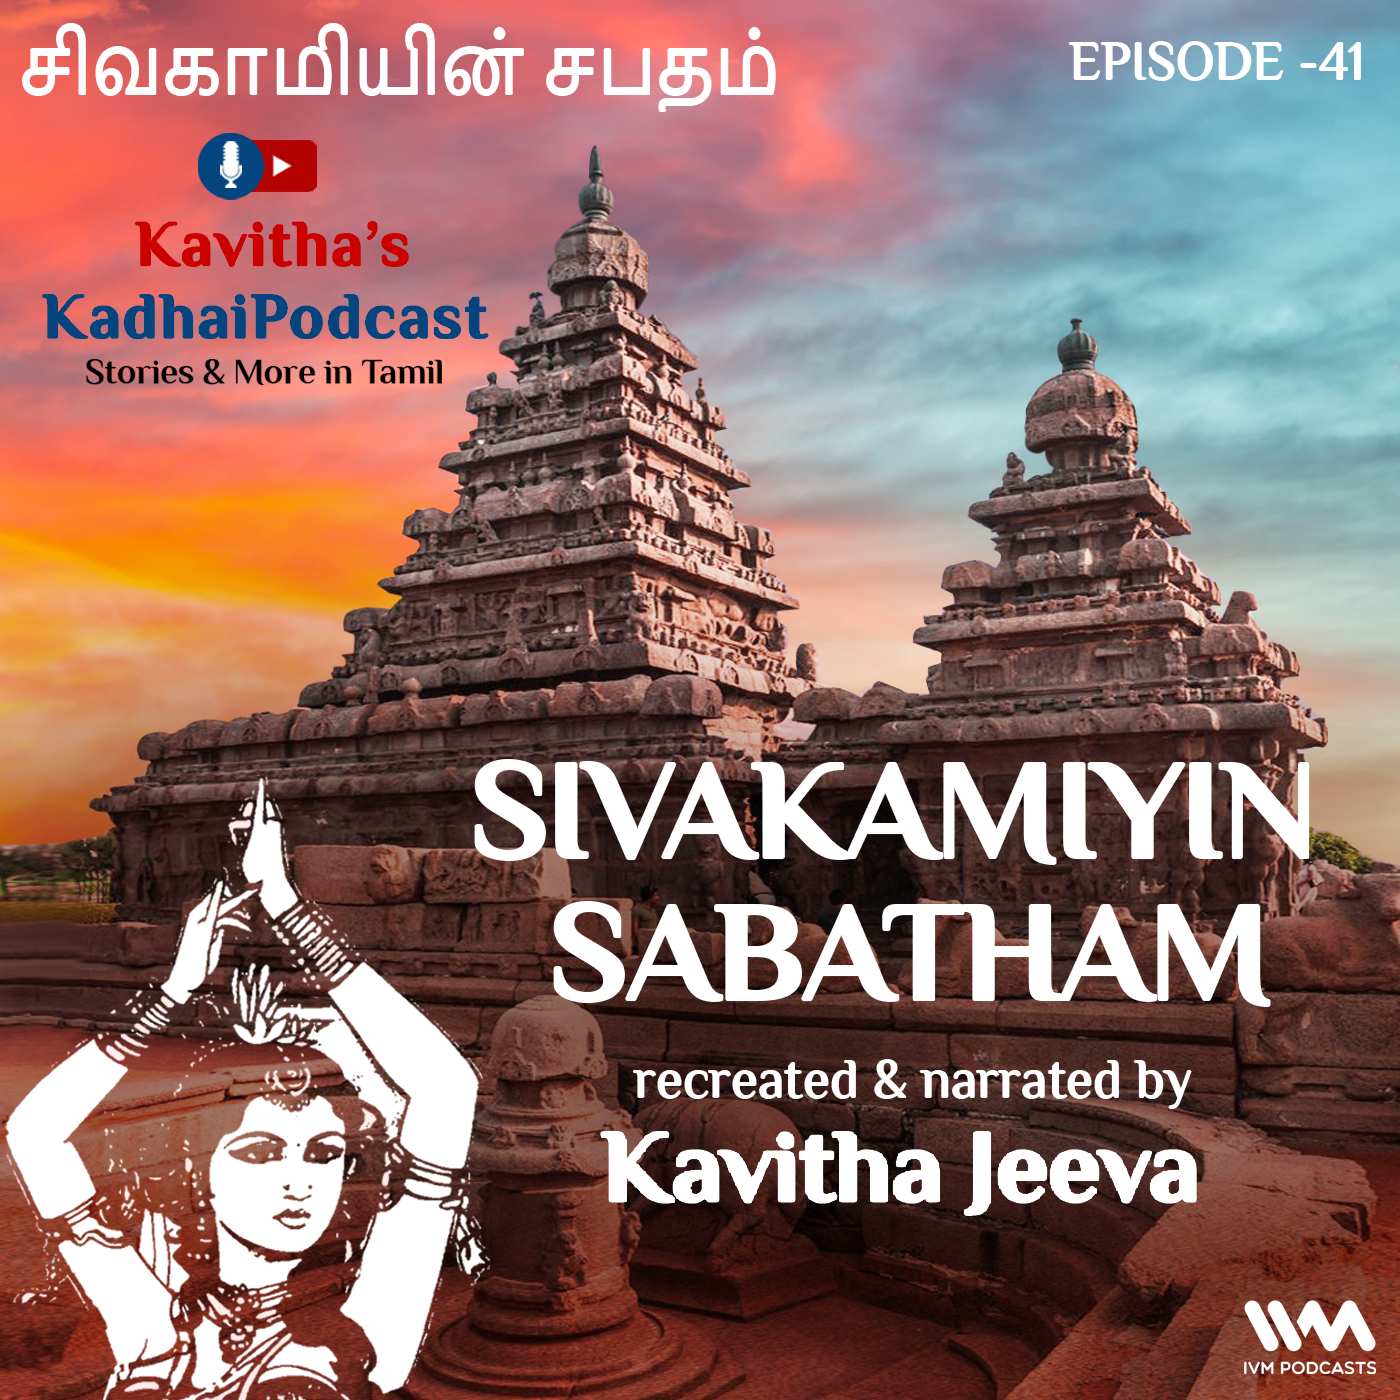 KadhaiPodcast's Sivakamiyin Sabatham - Episode # 41